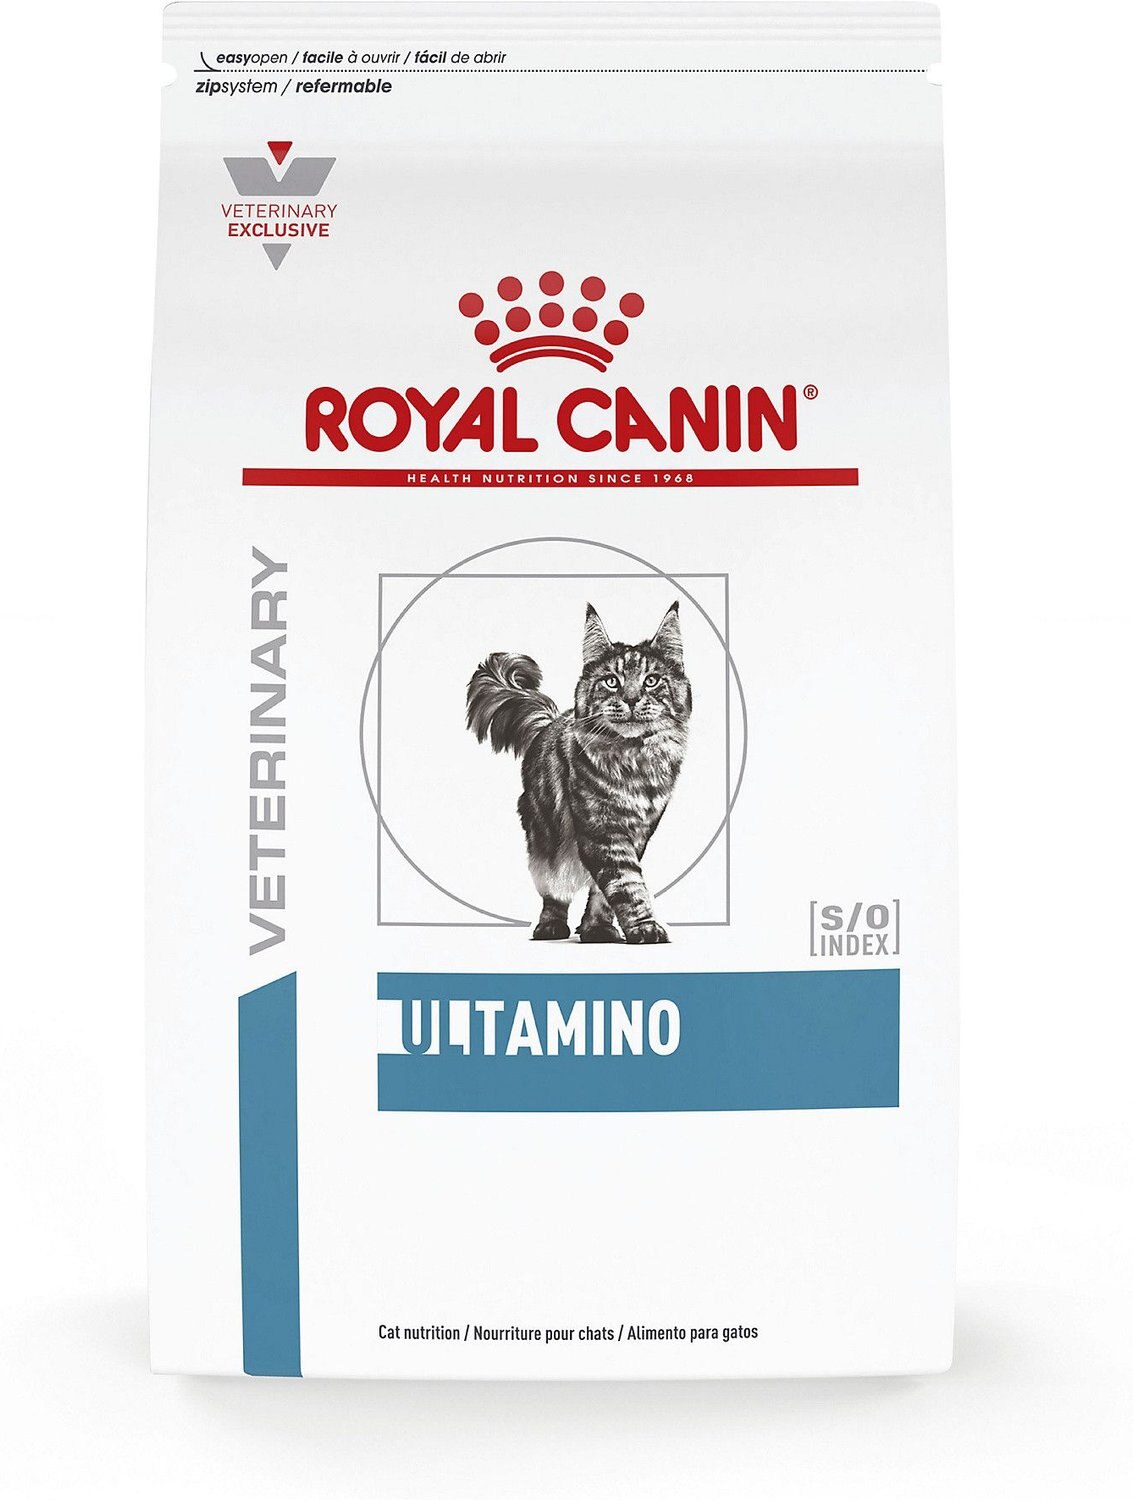 Royal Canin Cat Food Prescription